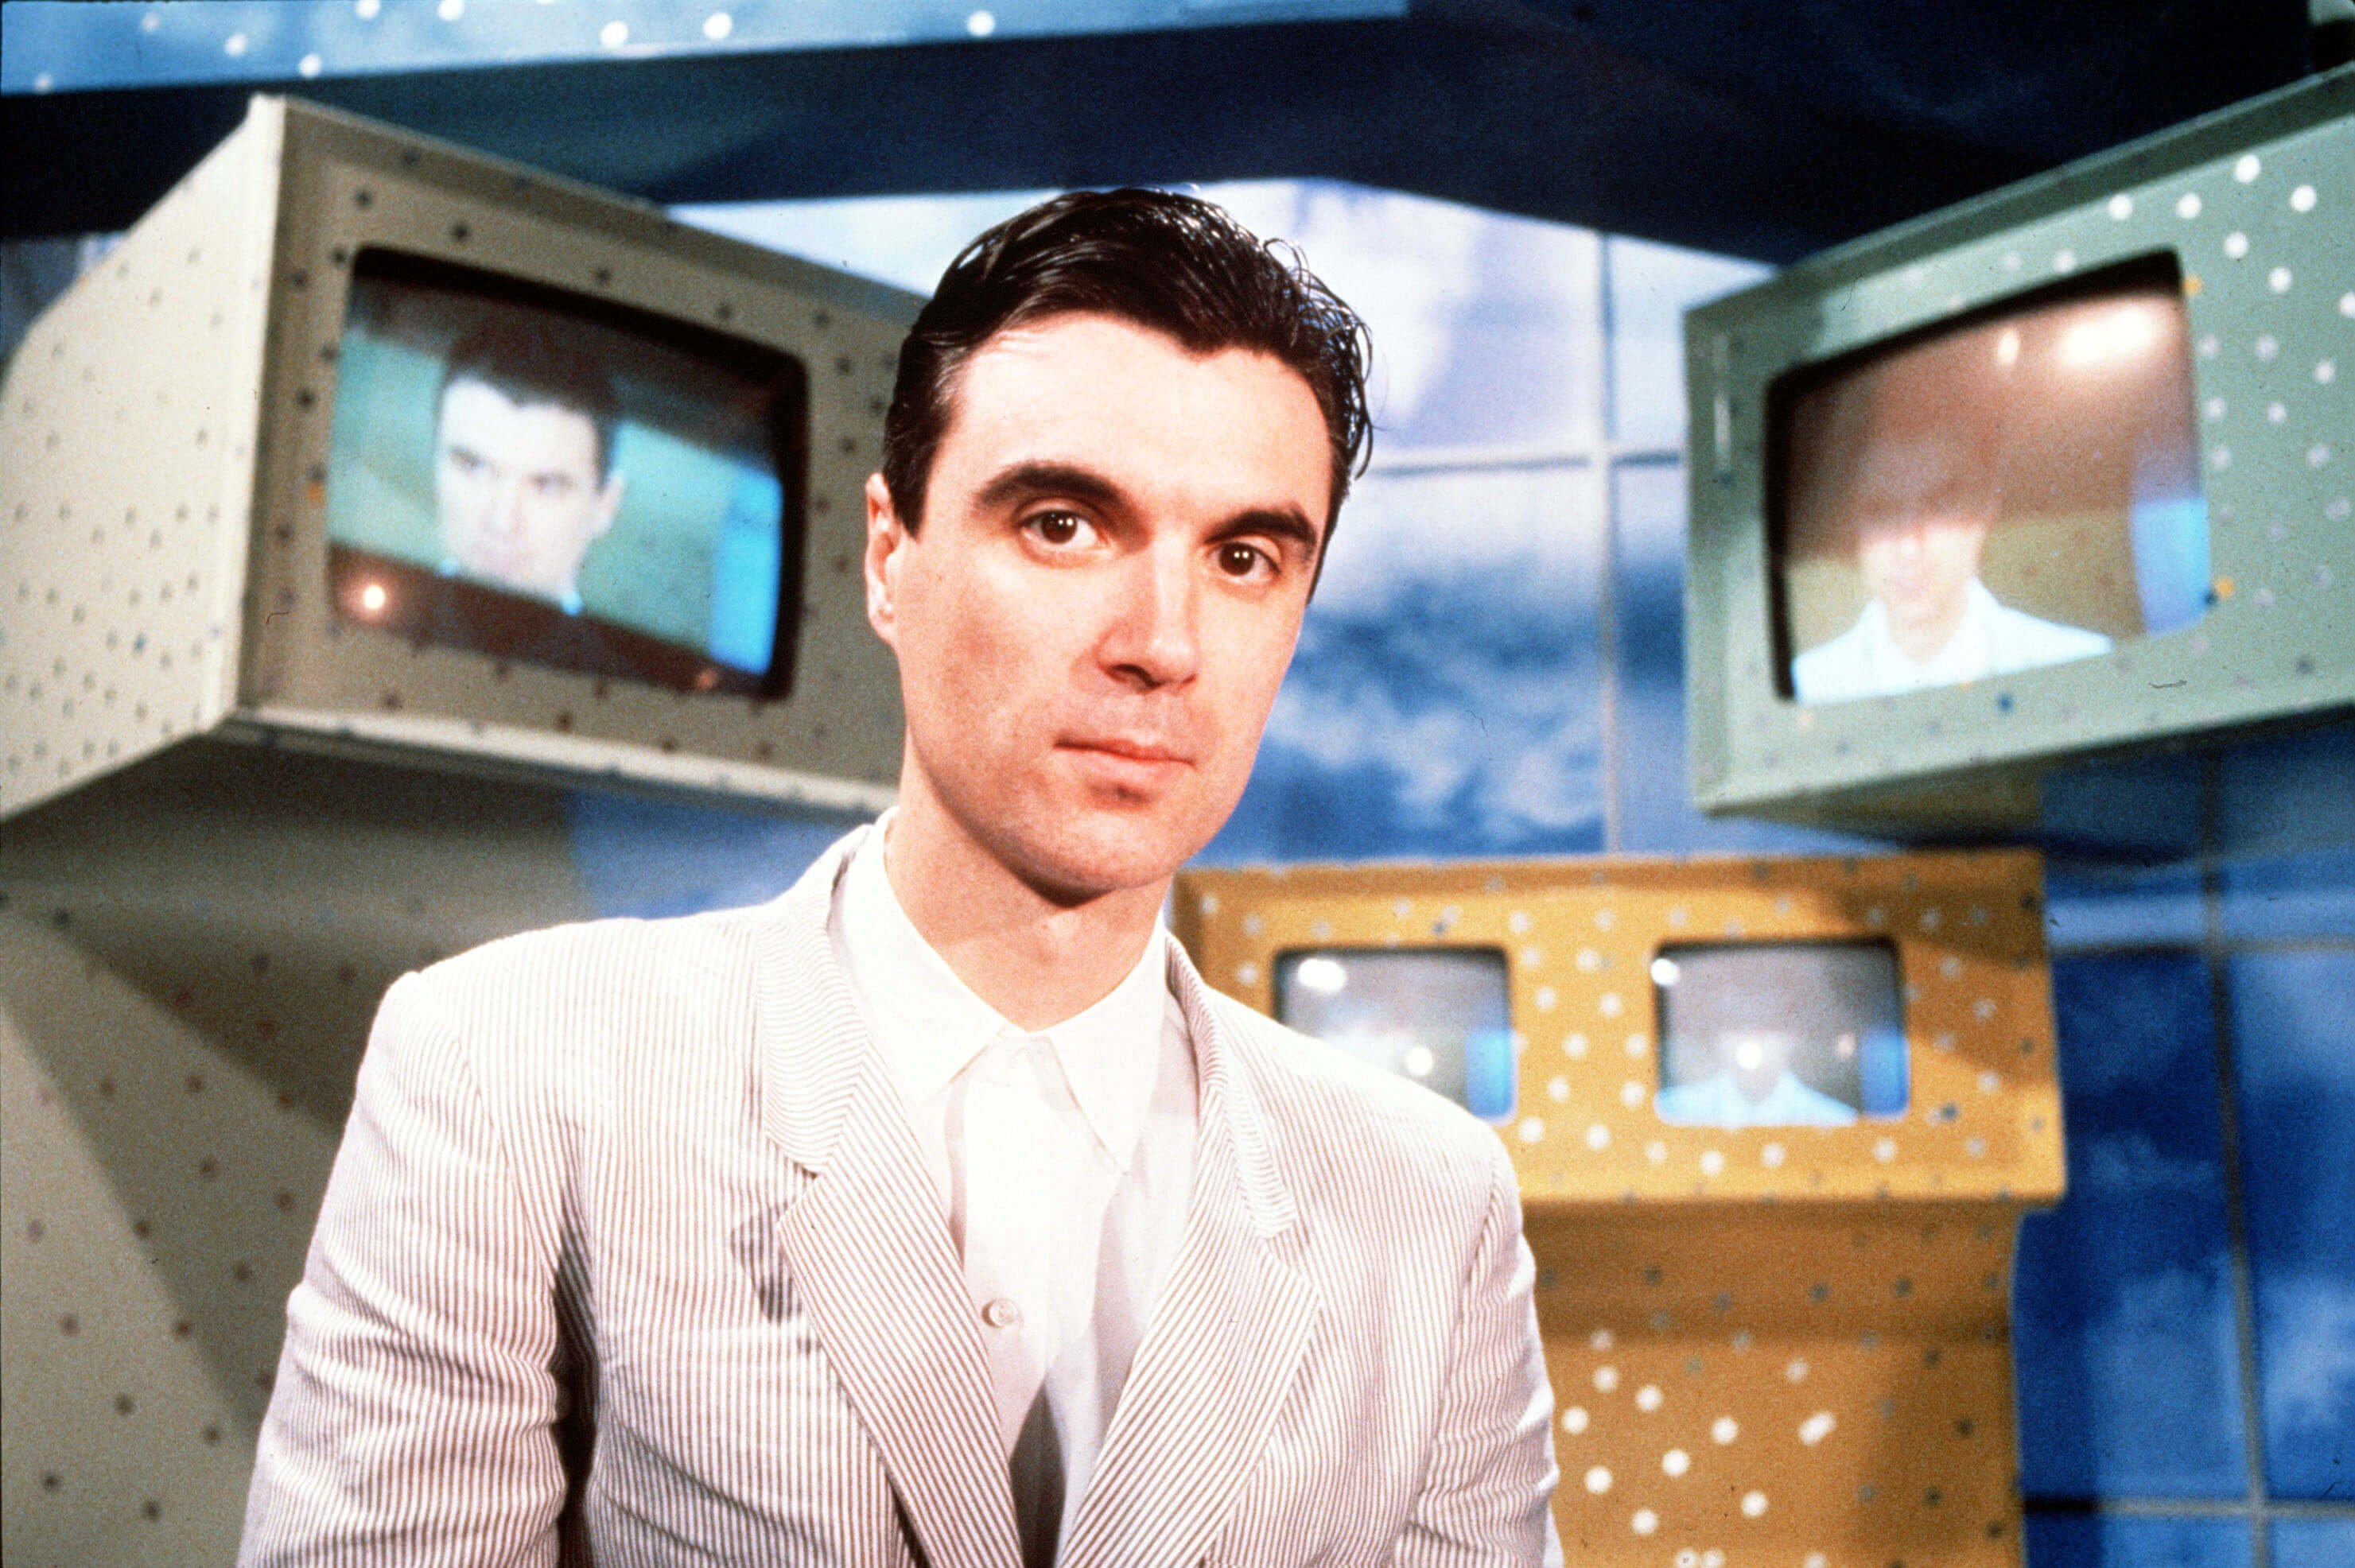 Talking Heads' David Byrne in a suit